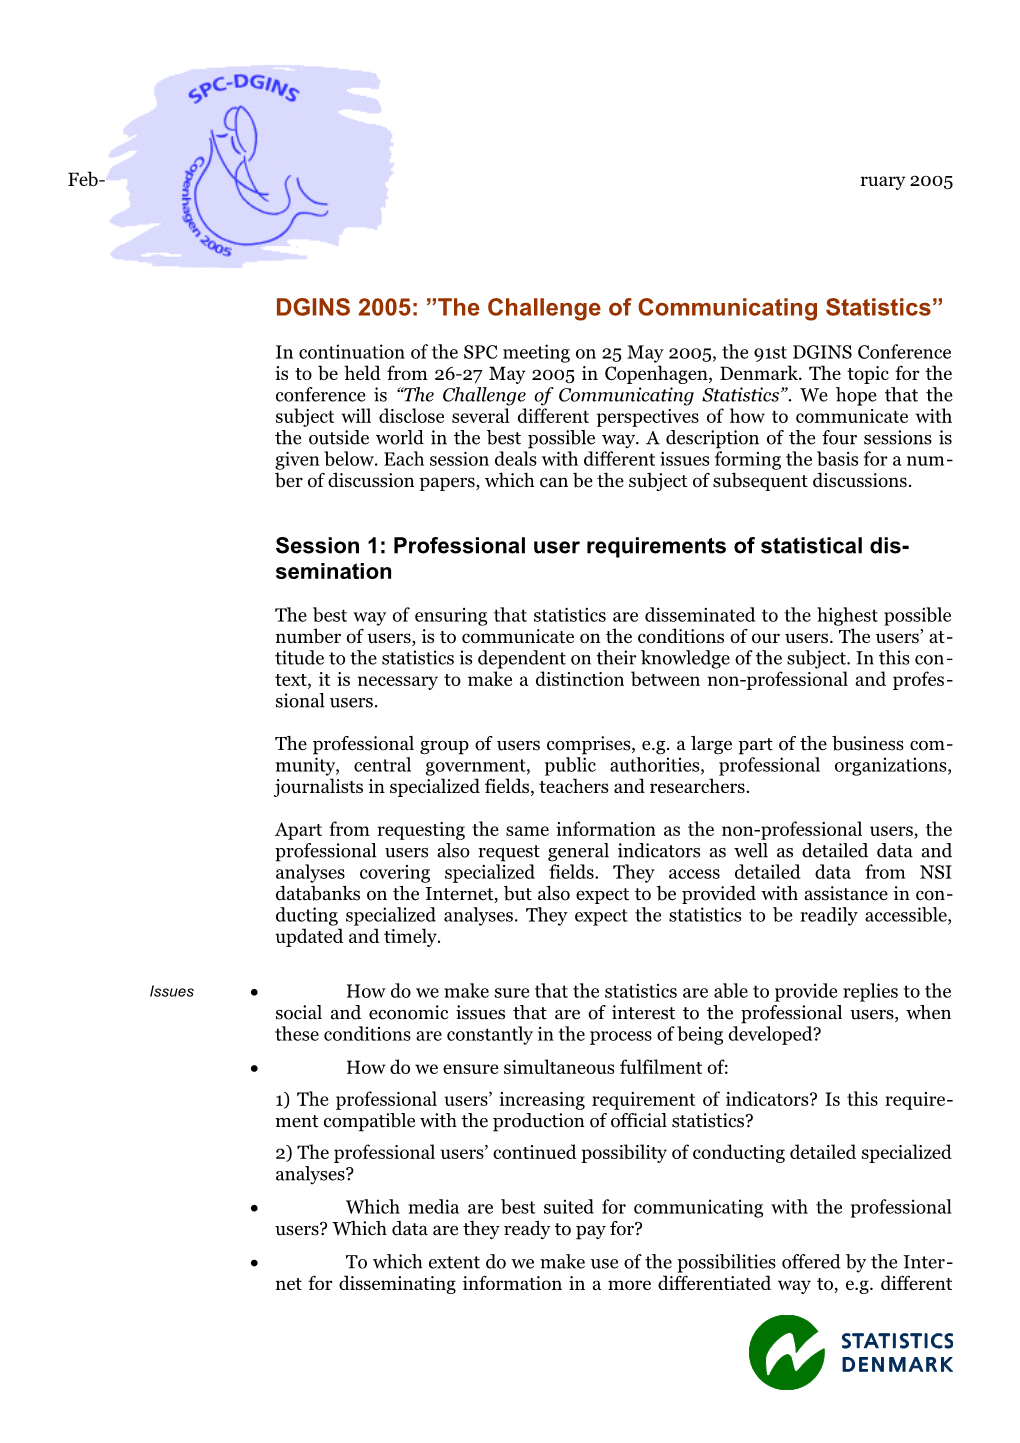 DGINS 2005: the Challenge of Communicating Statistics